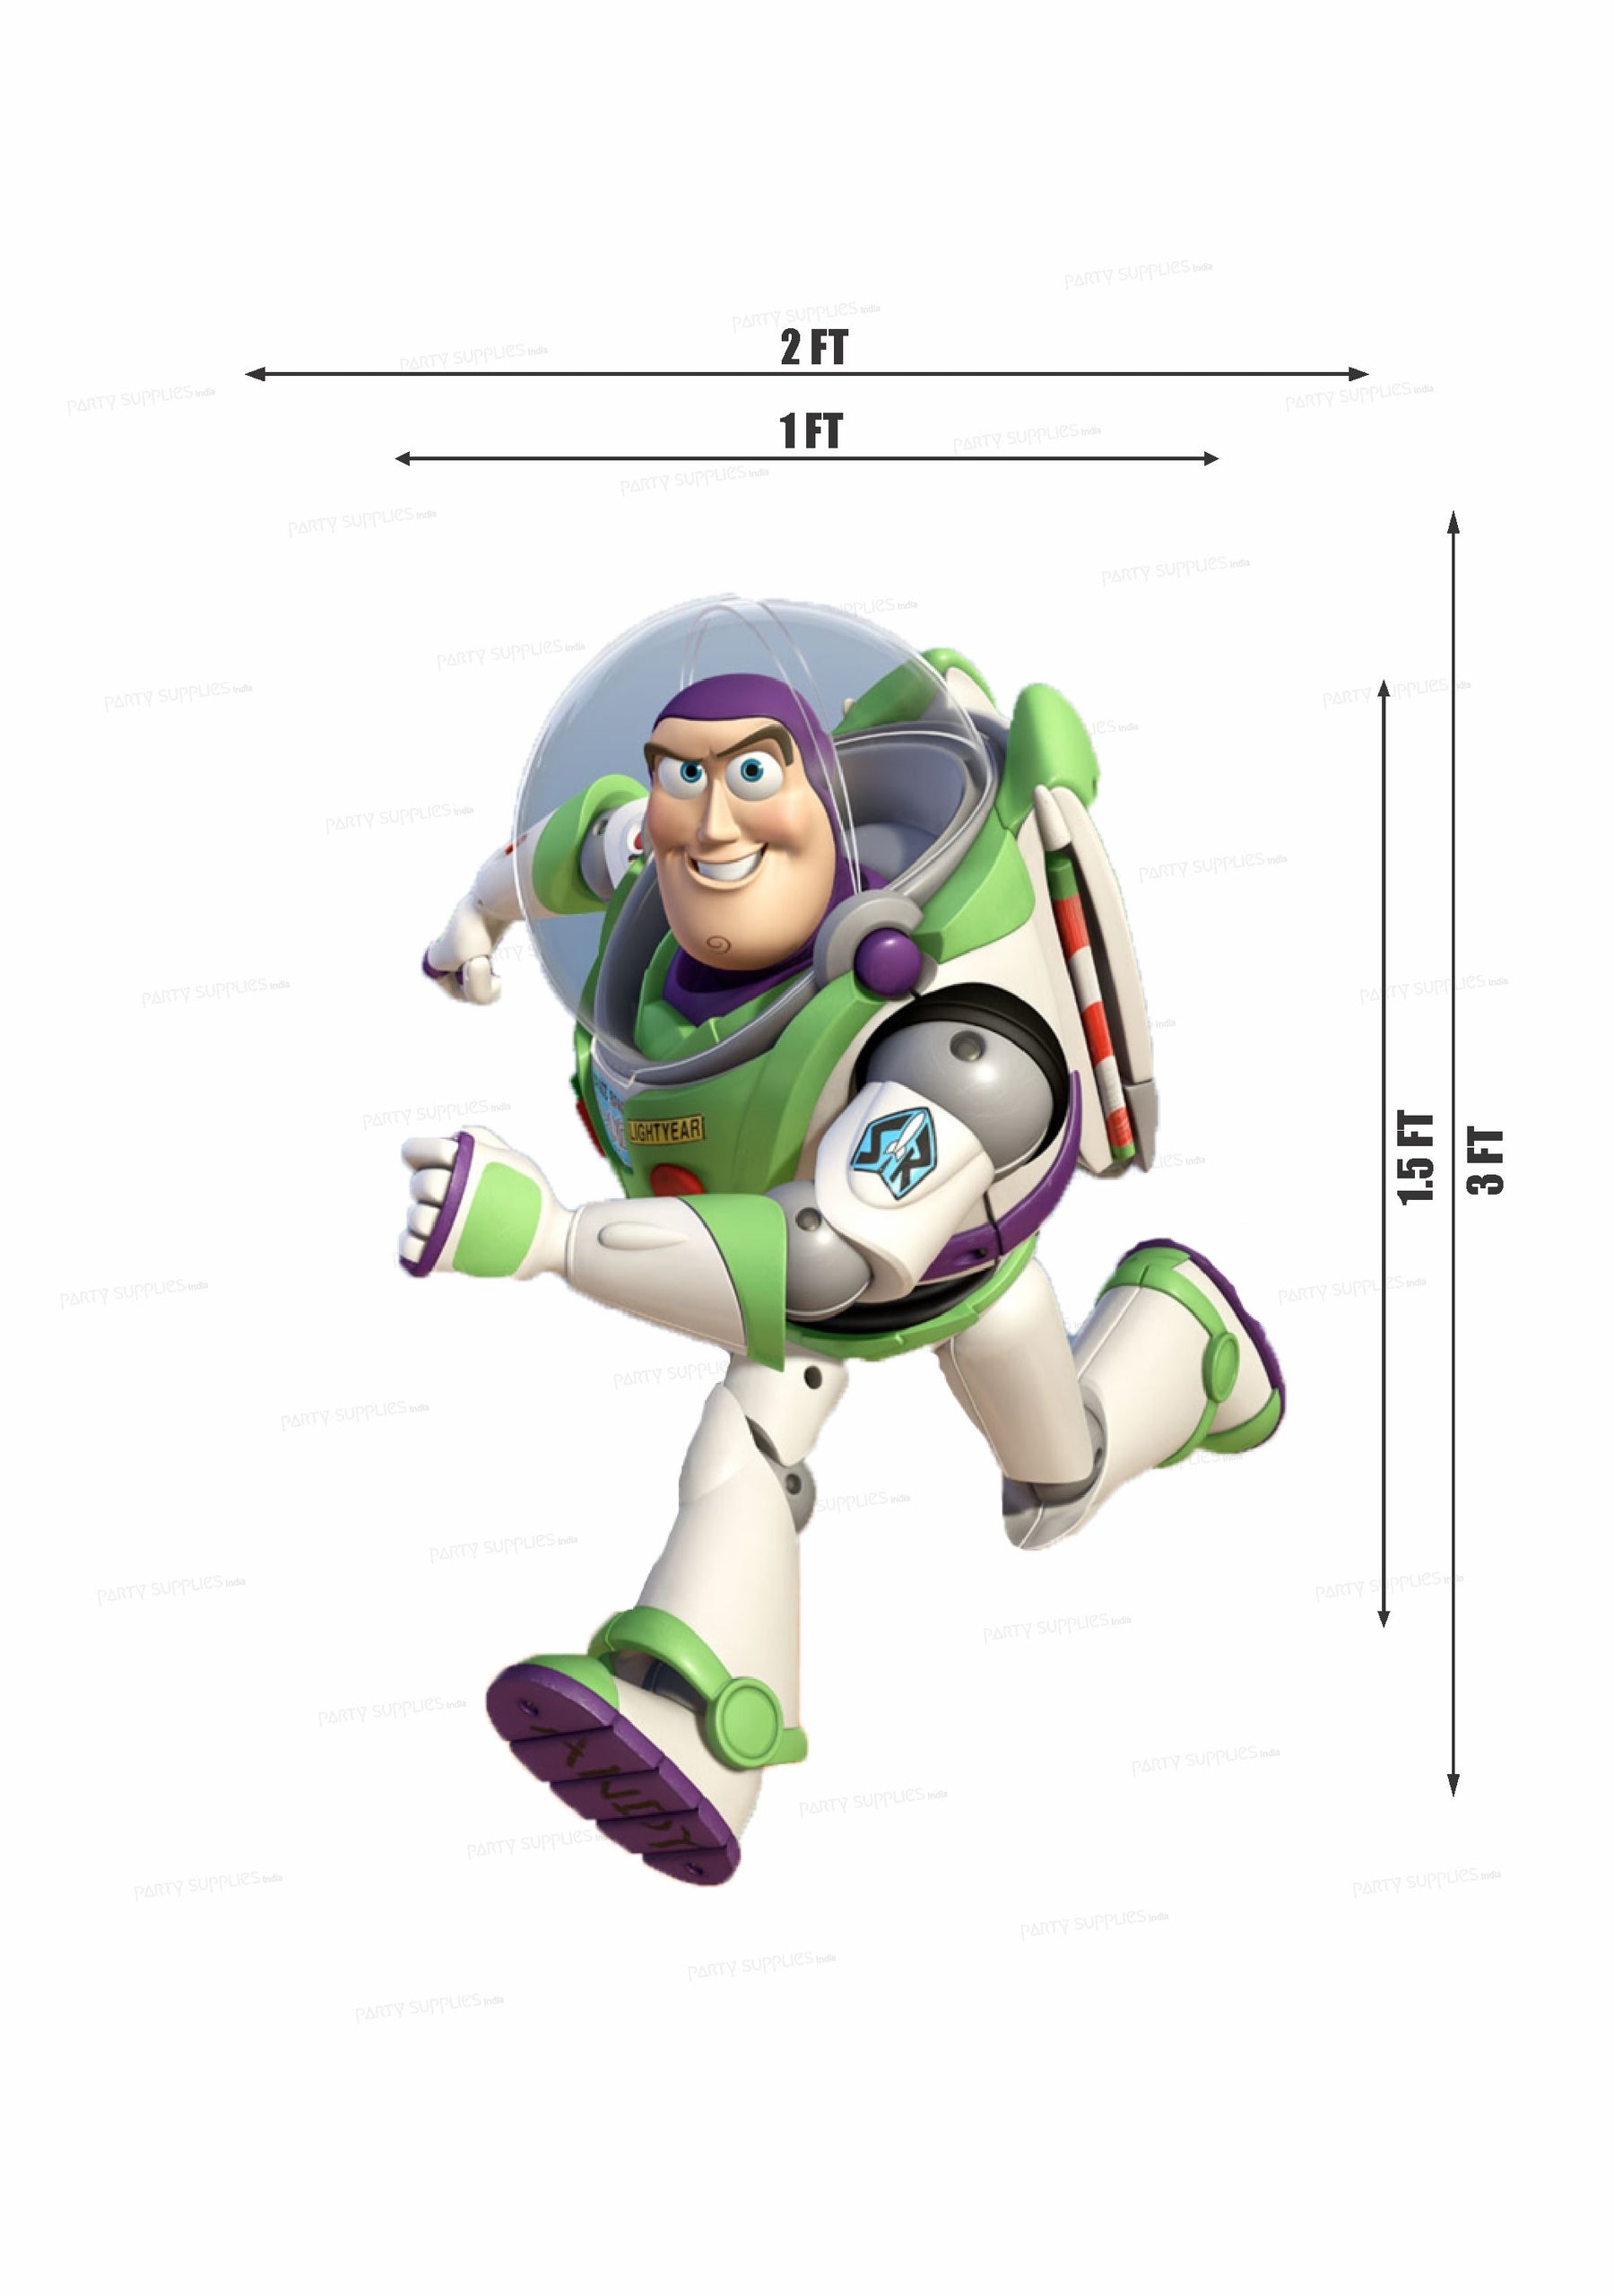 PSI Toy Story Theme Cutout - 13